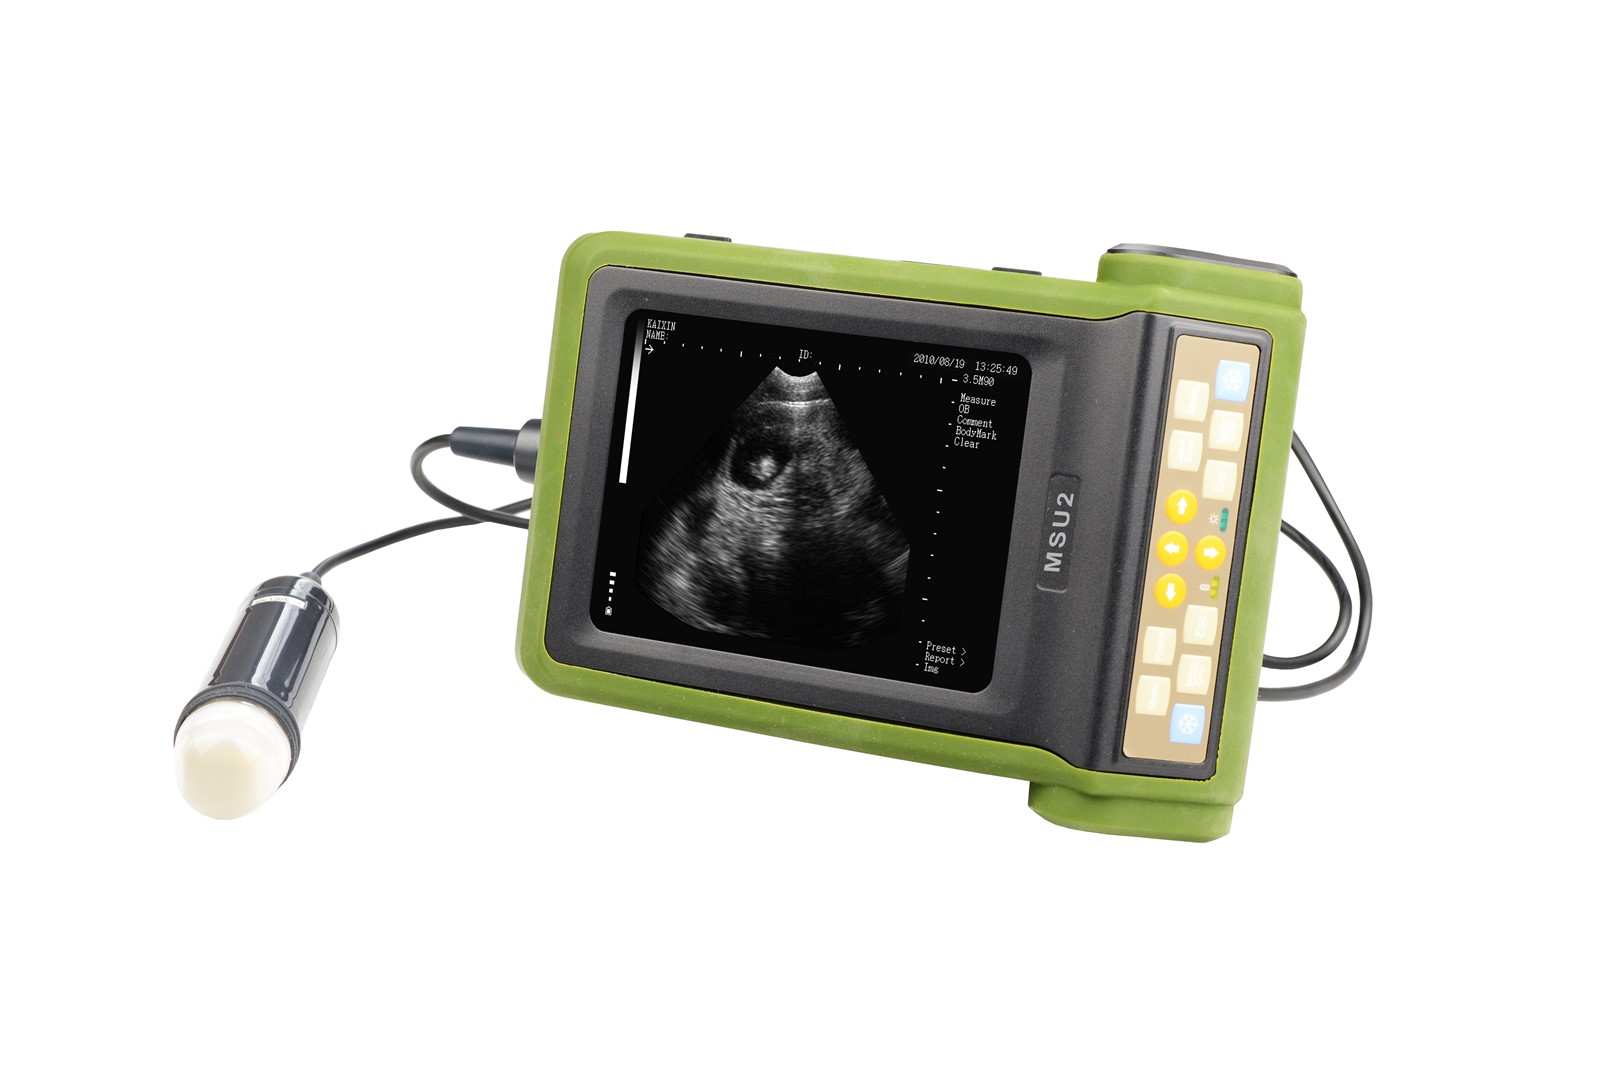 MSU2 pets hospital and farm animal use handheld ultrasound scanner